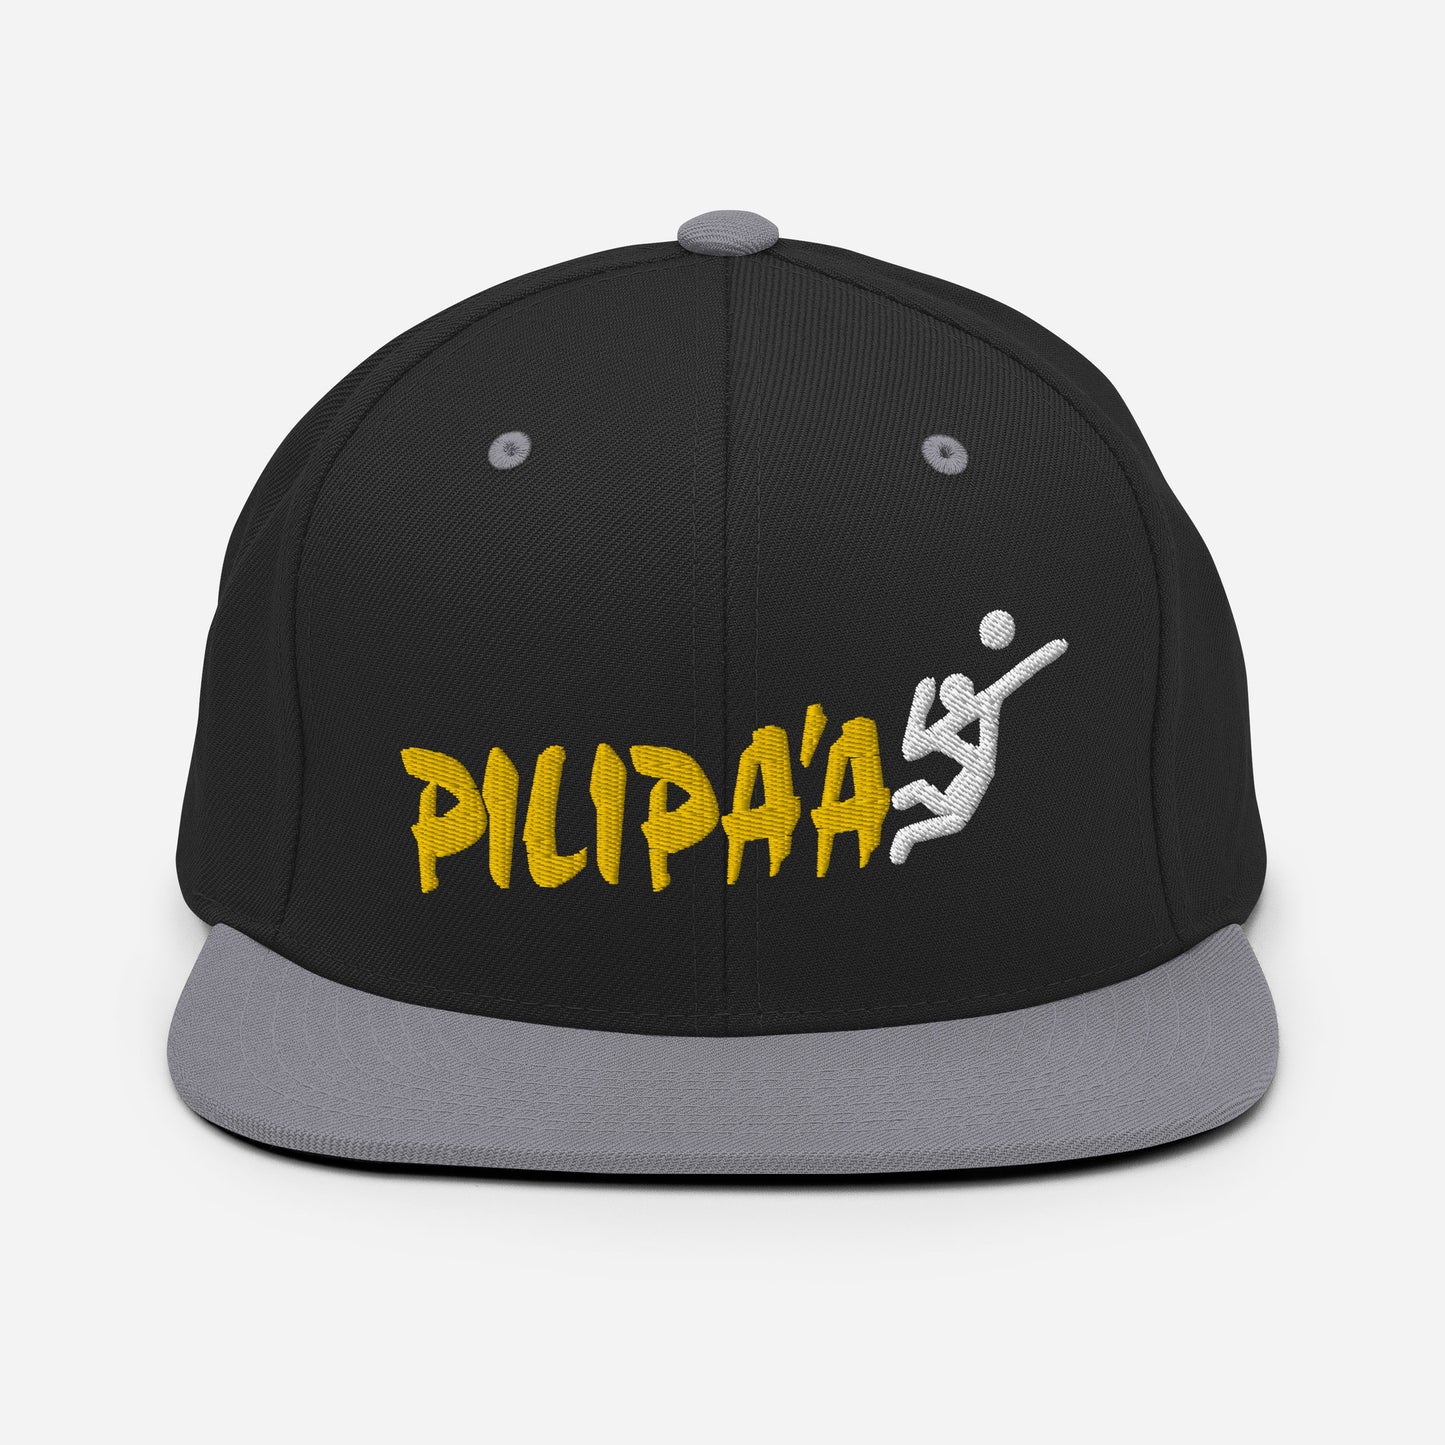 Pilipa'a Embroidered Snapback